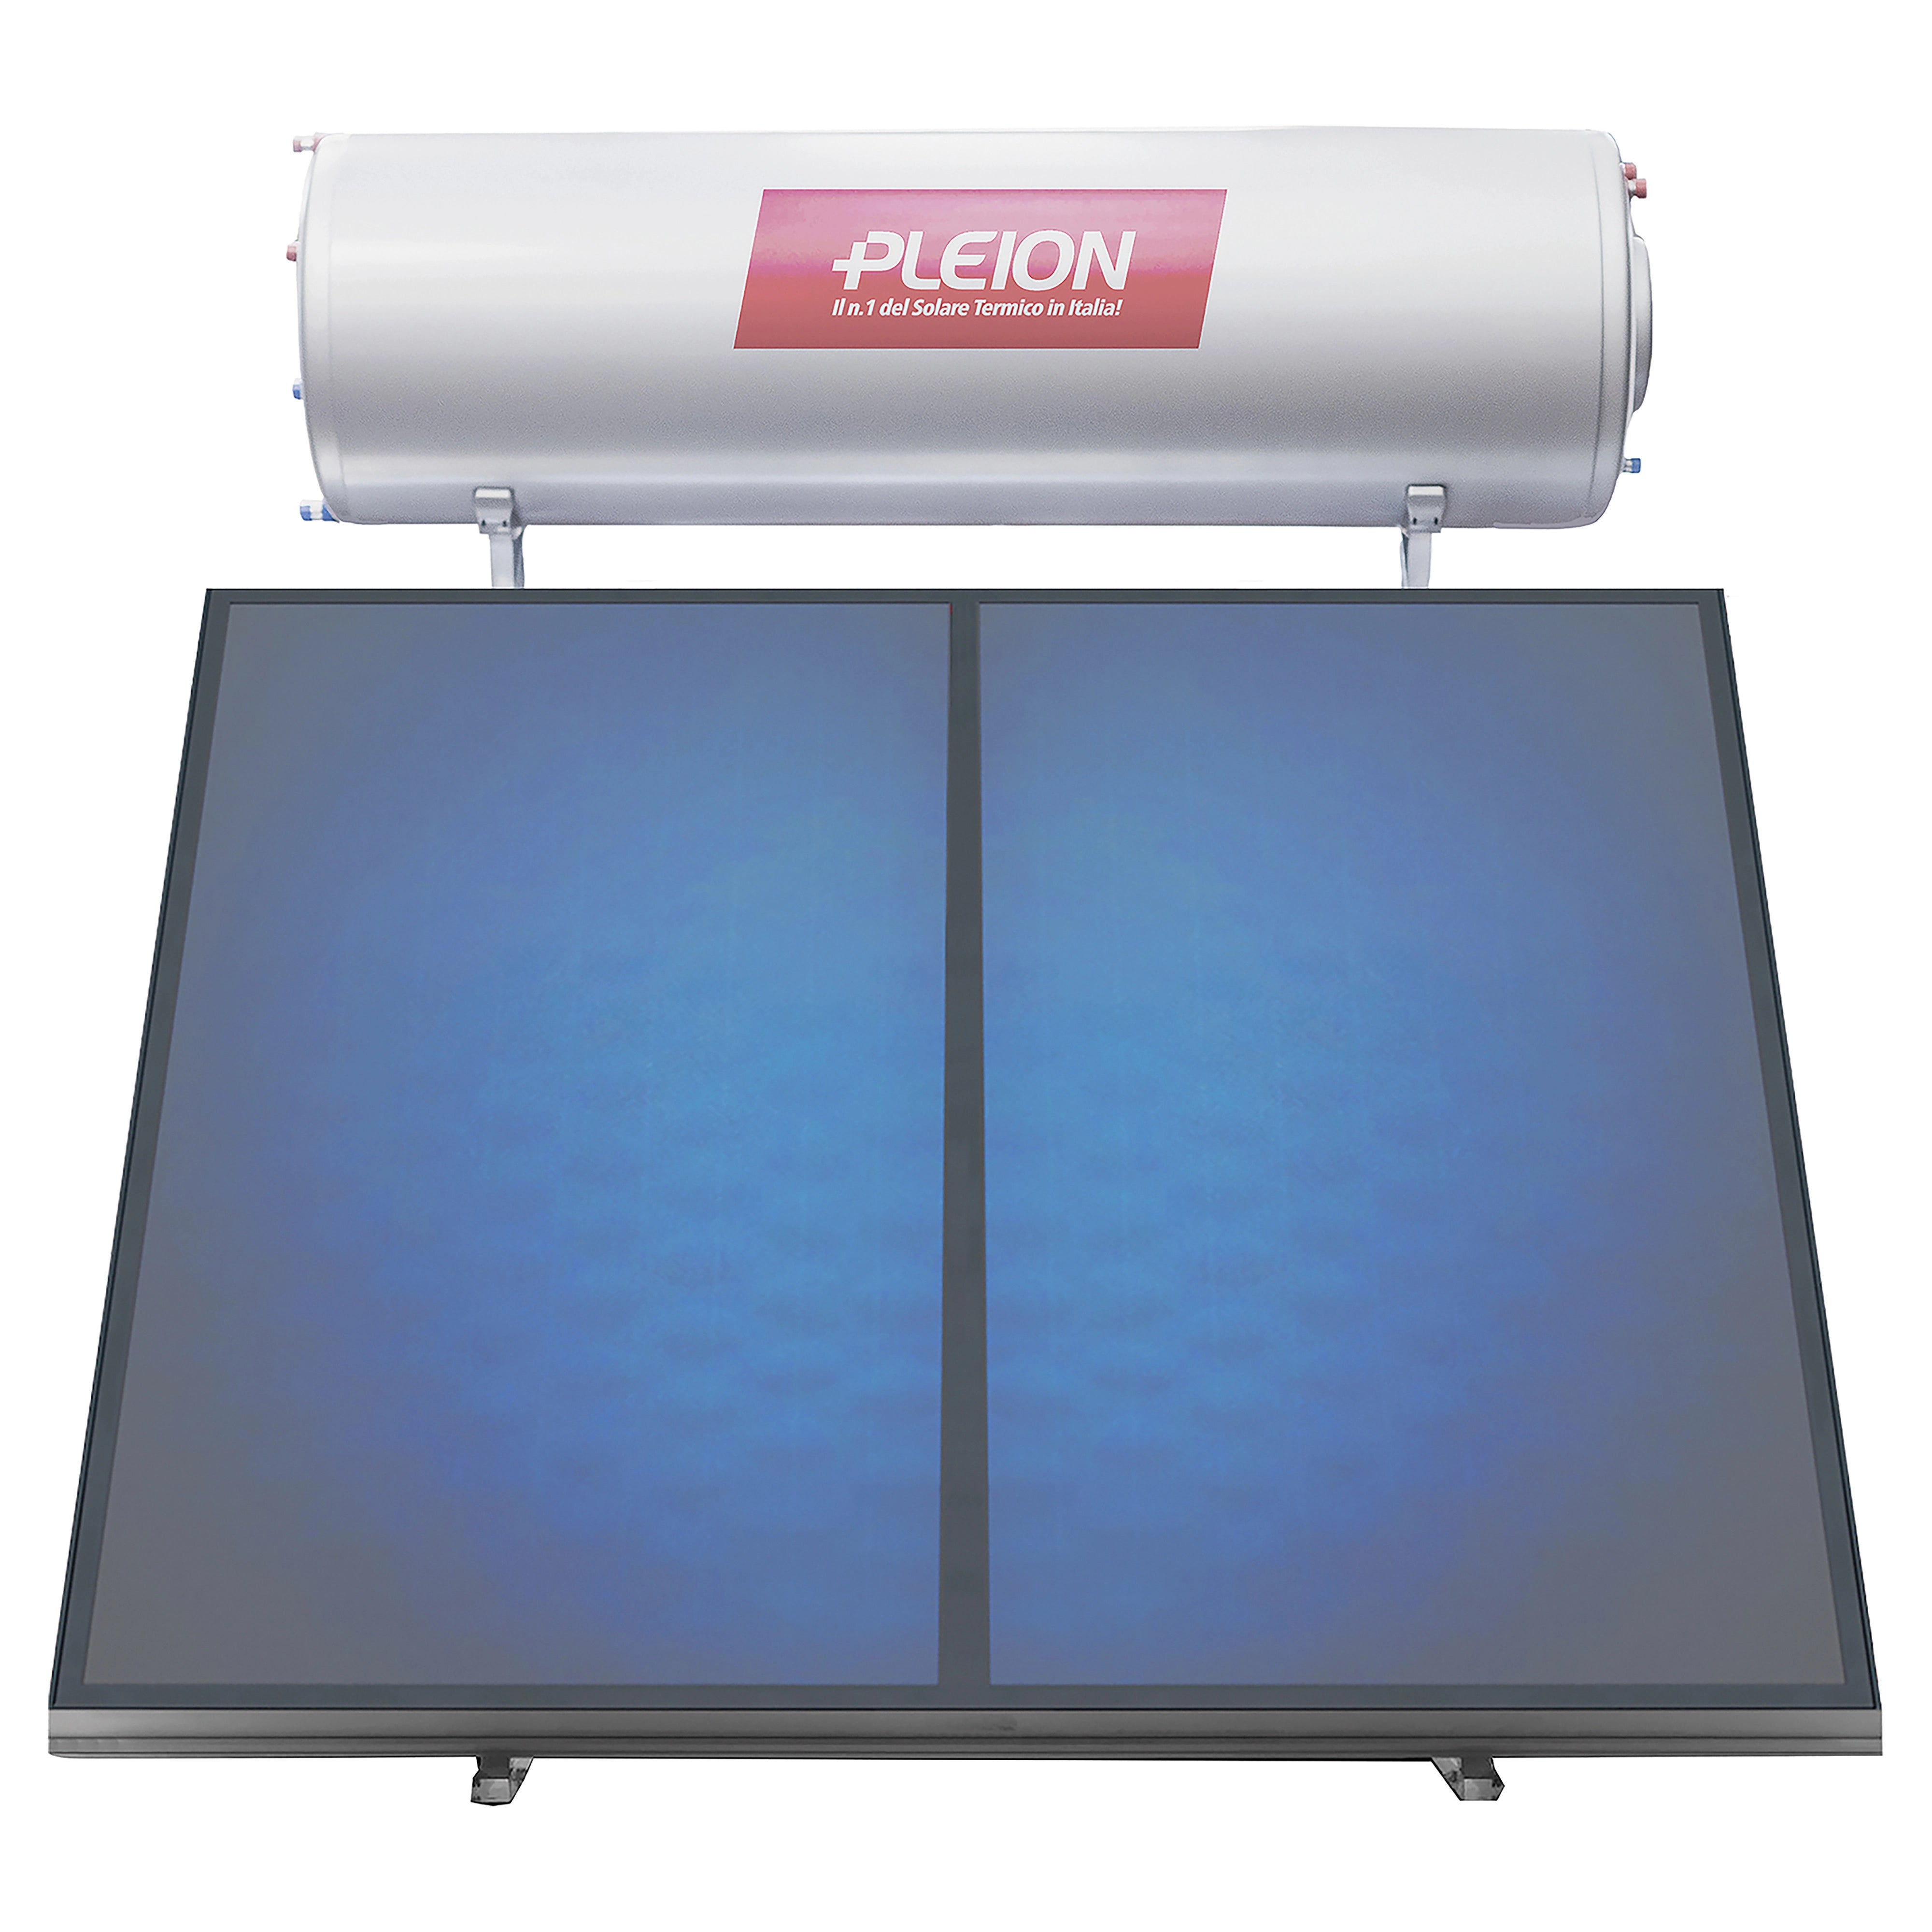 TECNOMAT Solar thermal and hot water storage